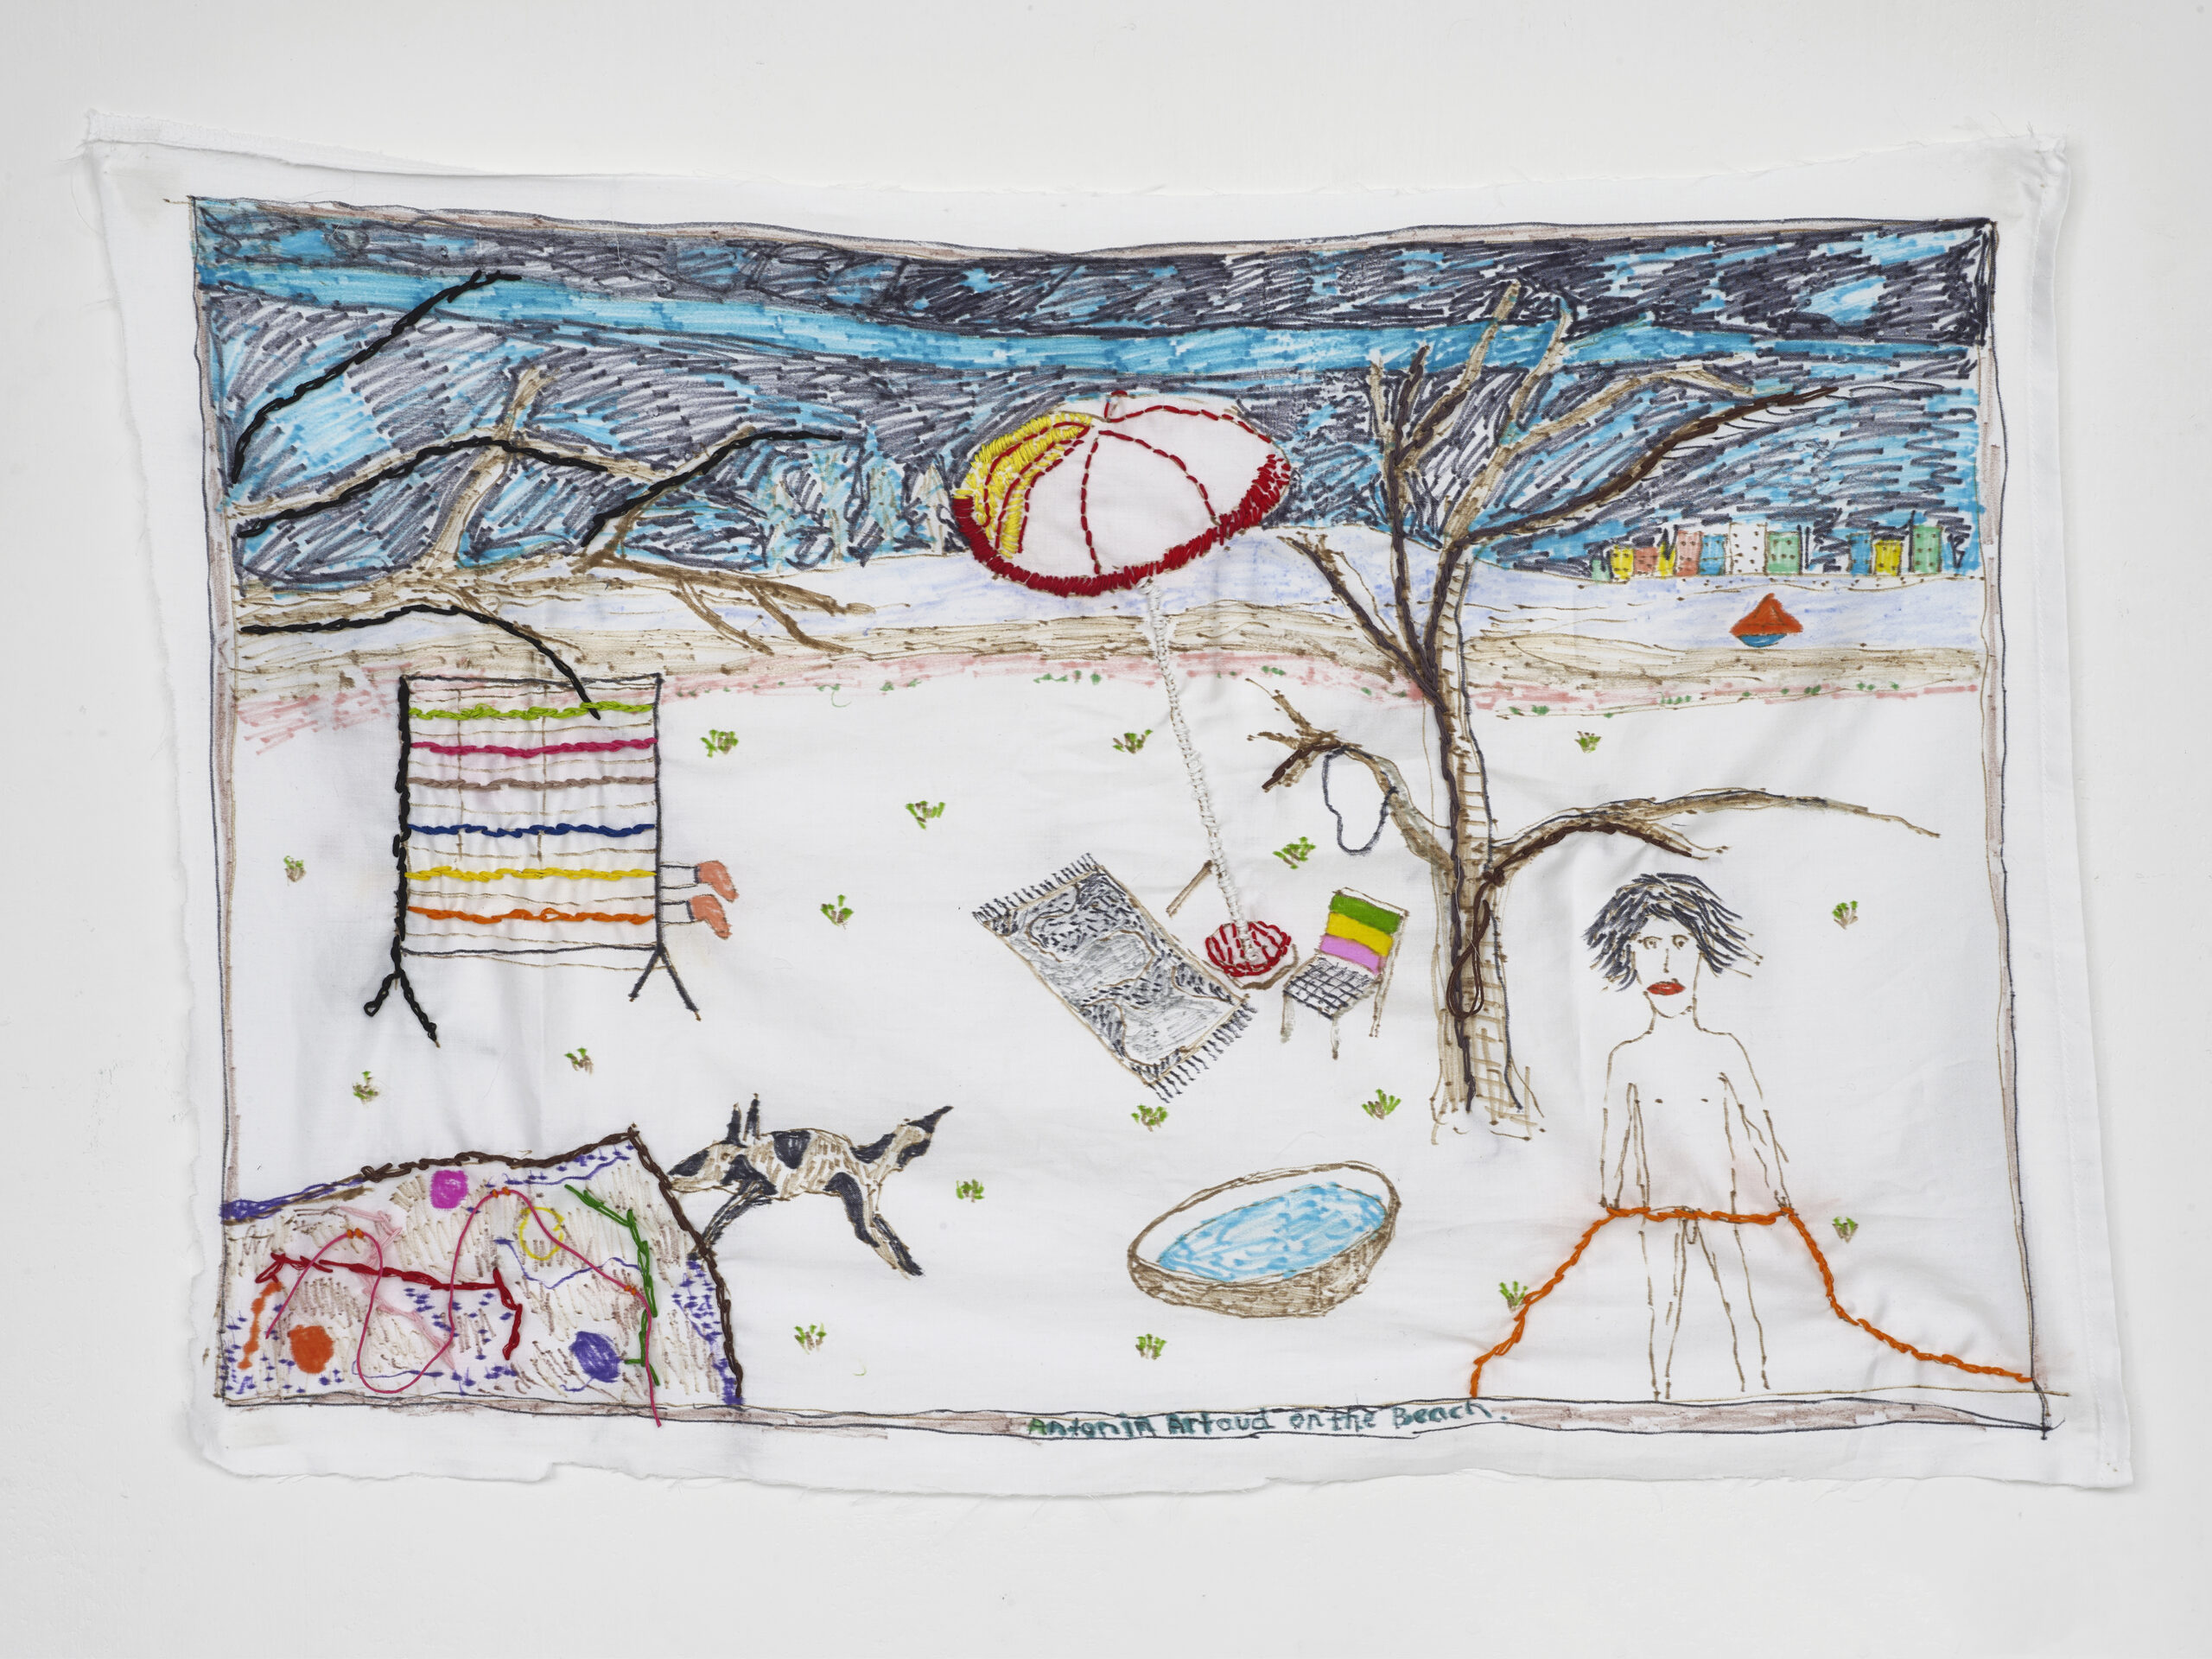 Brian Dawn Chalkley Antonin Artaud on the beach (2020) Pencil, felt tip and thread on cotton pillow case, 75 cm x 45 cm.